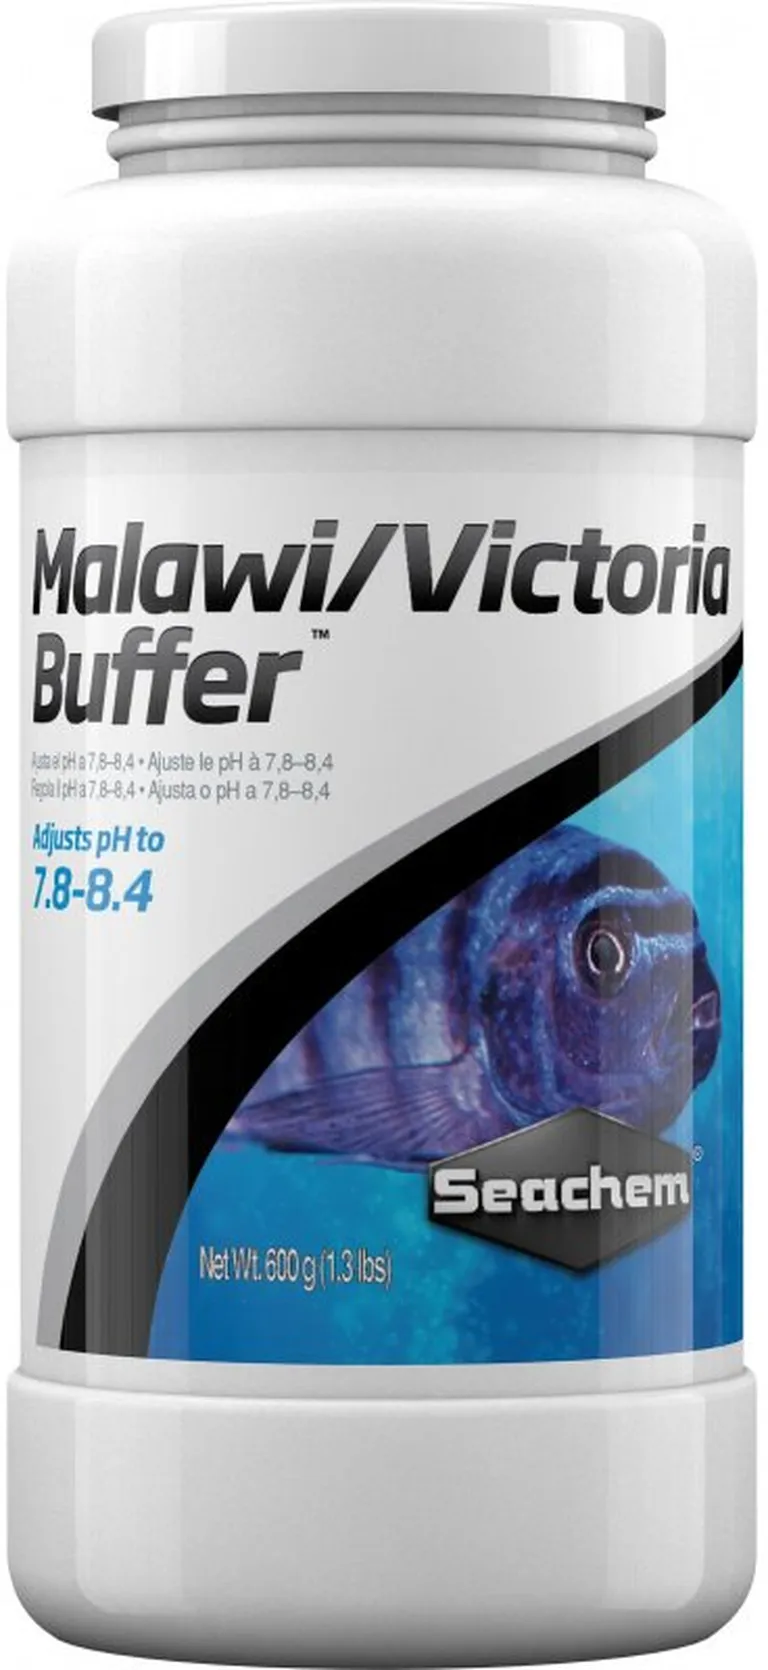 Seachem Malawi Victoria Buffer Photo 1